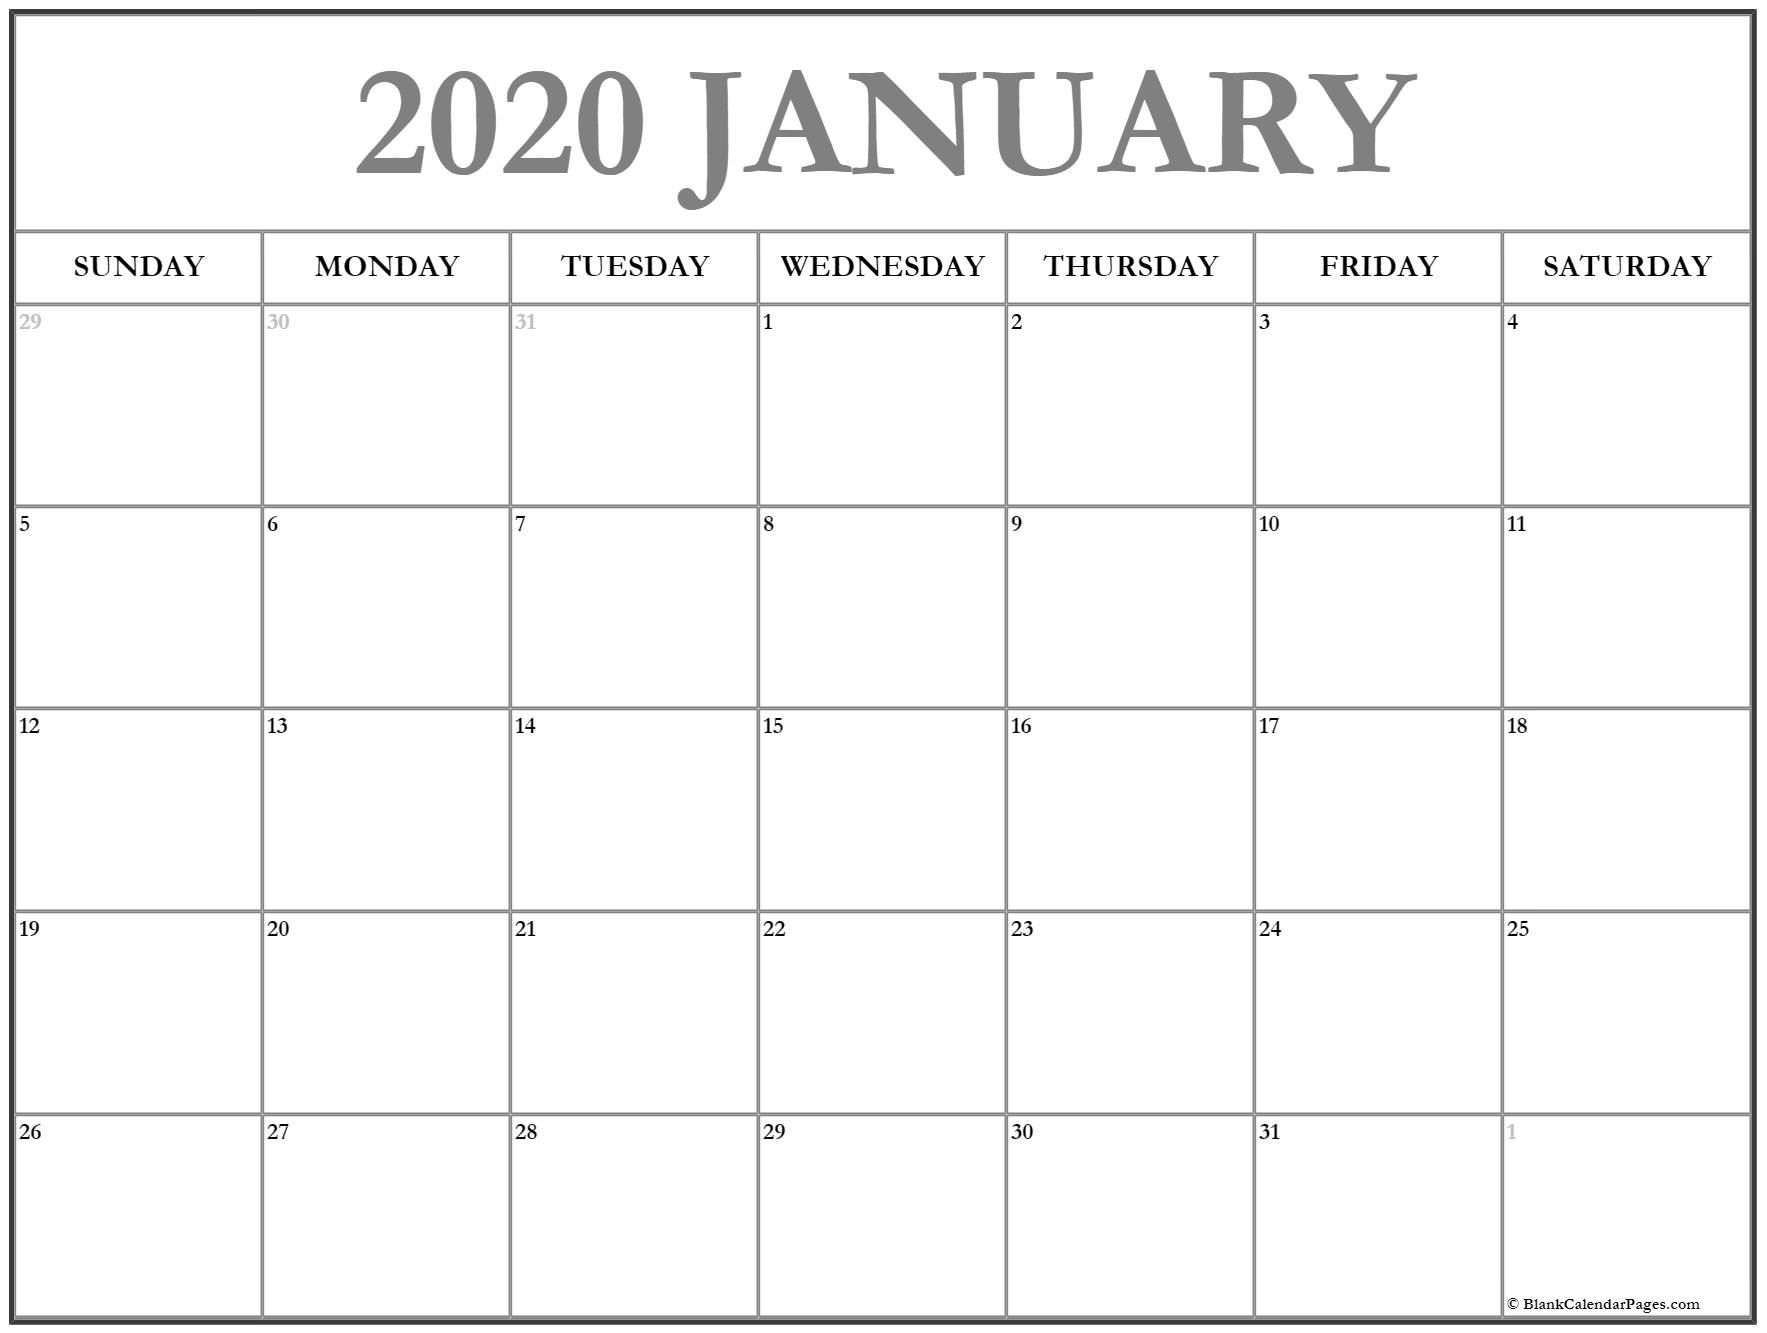 January 2020 Calendar | Free Printable Monthly Calendars